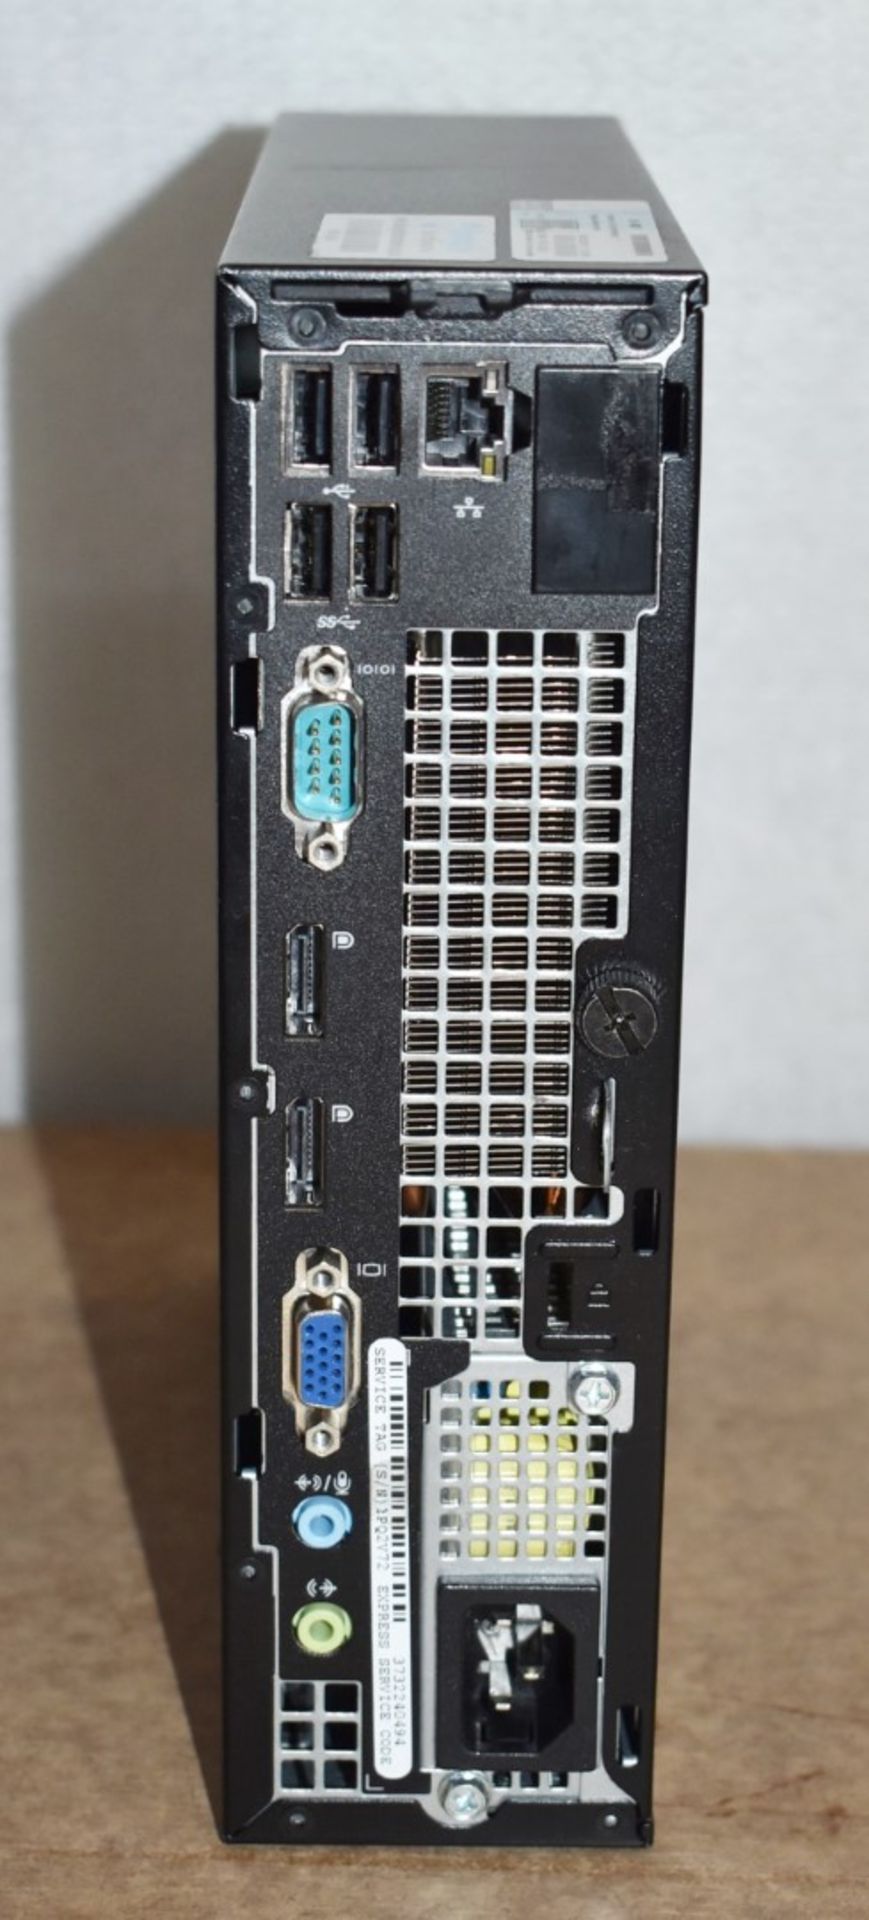 1 x Dell Optiplex 9020 Small Form Fact Desktop Computer - Features an Intel i5-4590S Quad Core - Image 2 of 4